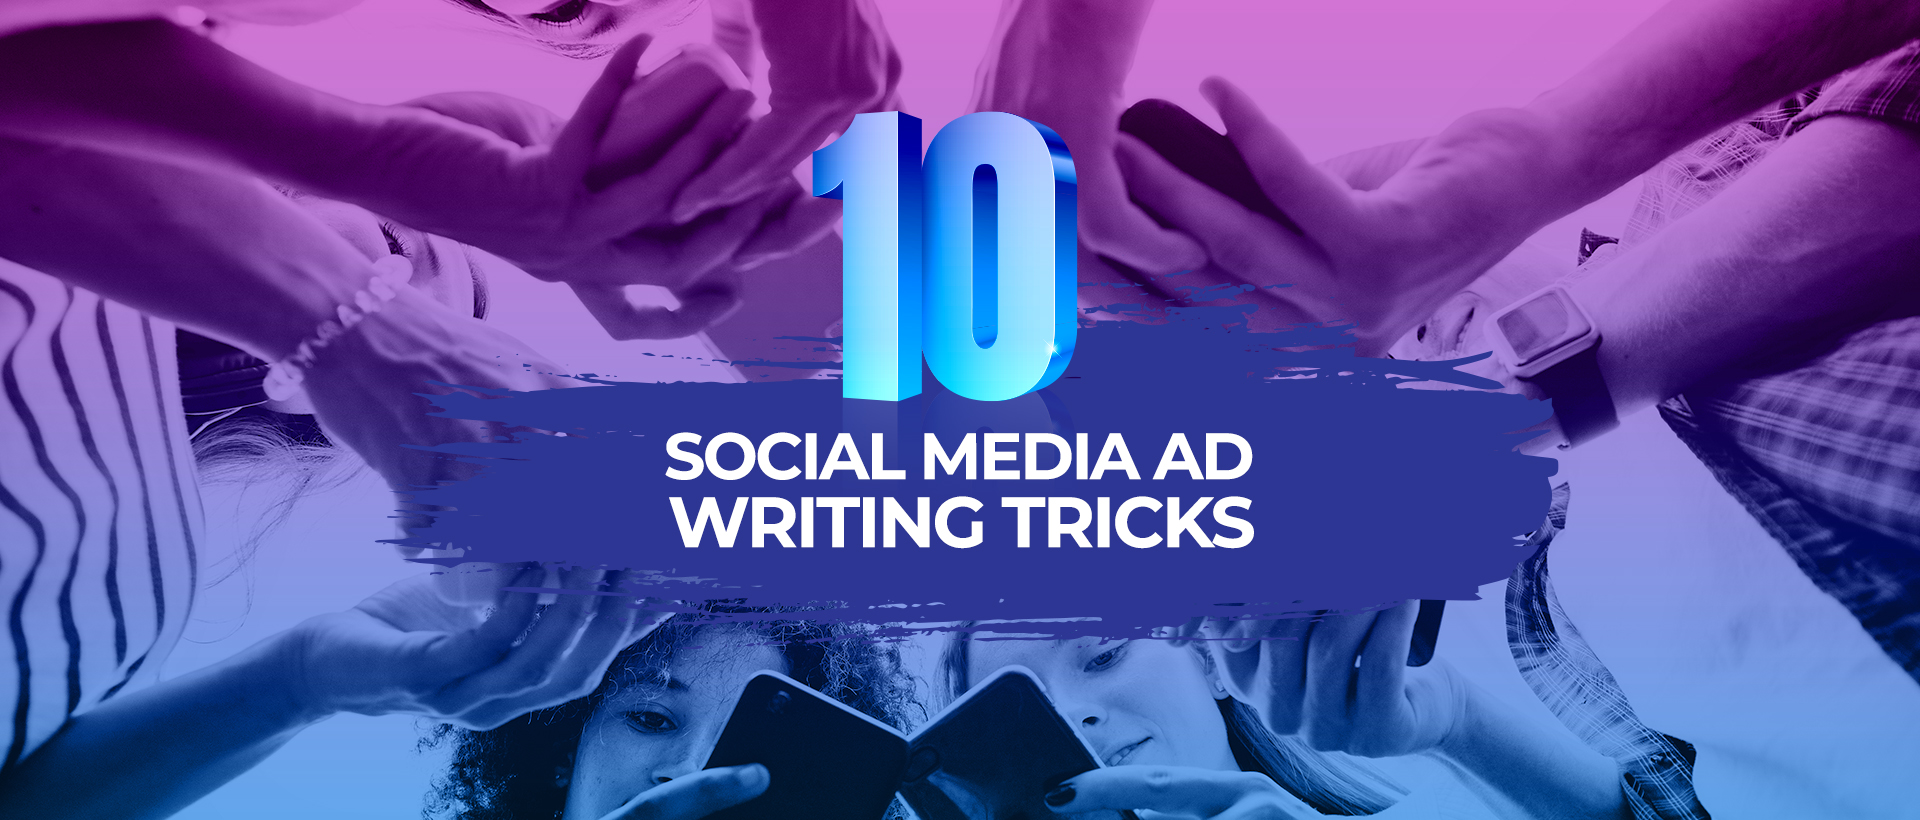 10 Social media AD Writing Tricks